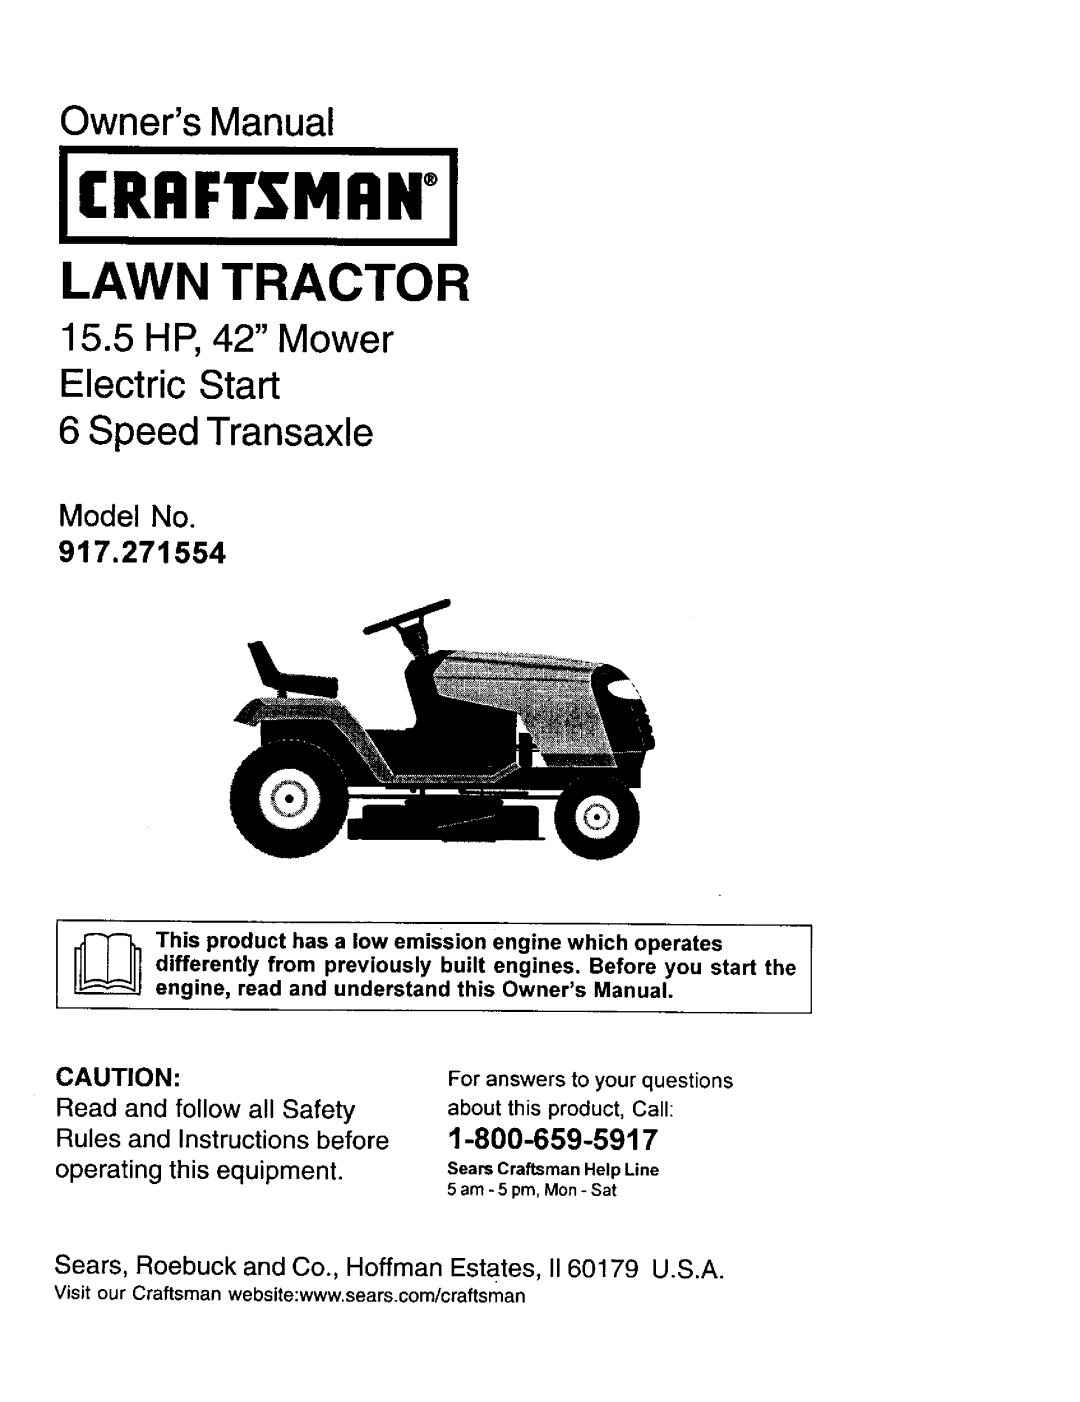 Craftsman 917.271554 owner manual OwnersManual 15.5HP, 42 Mower Electric Start, Speed Transaxle, Model No 